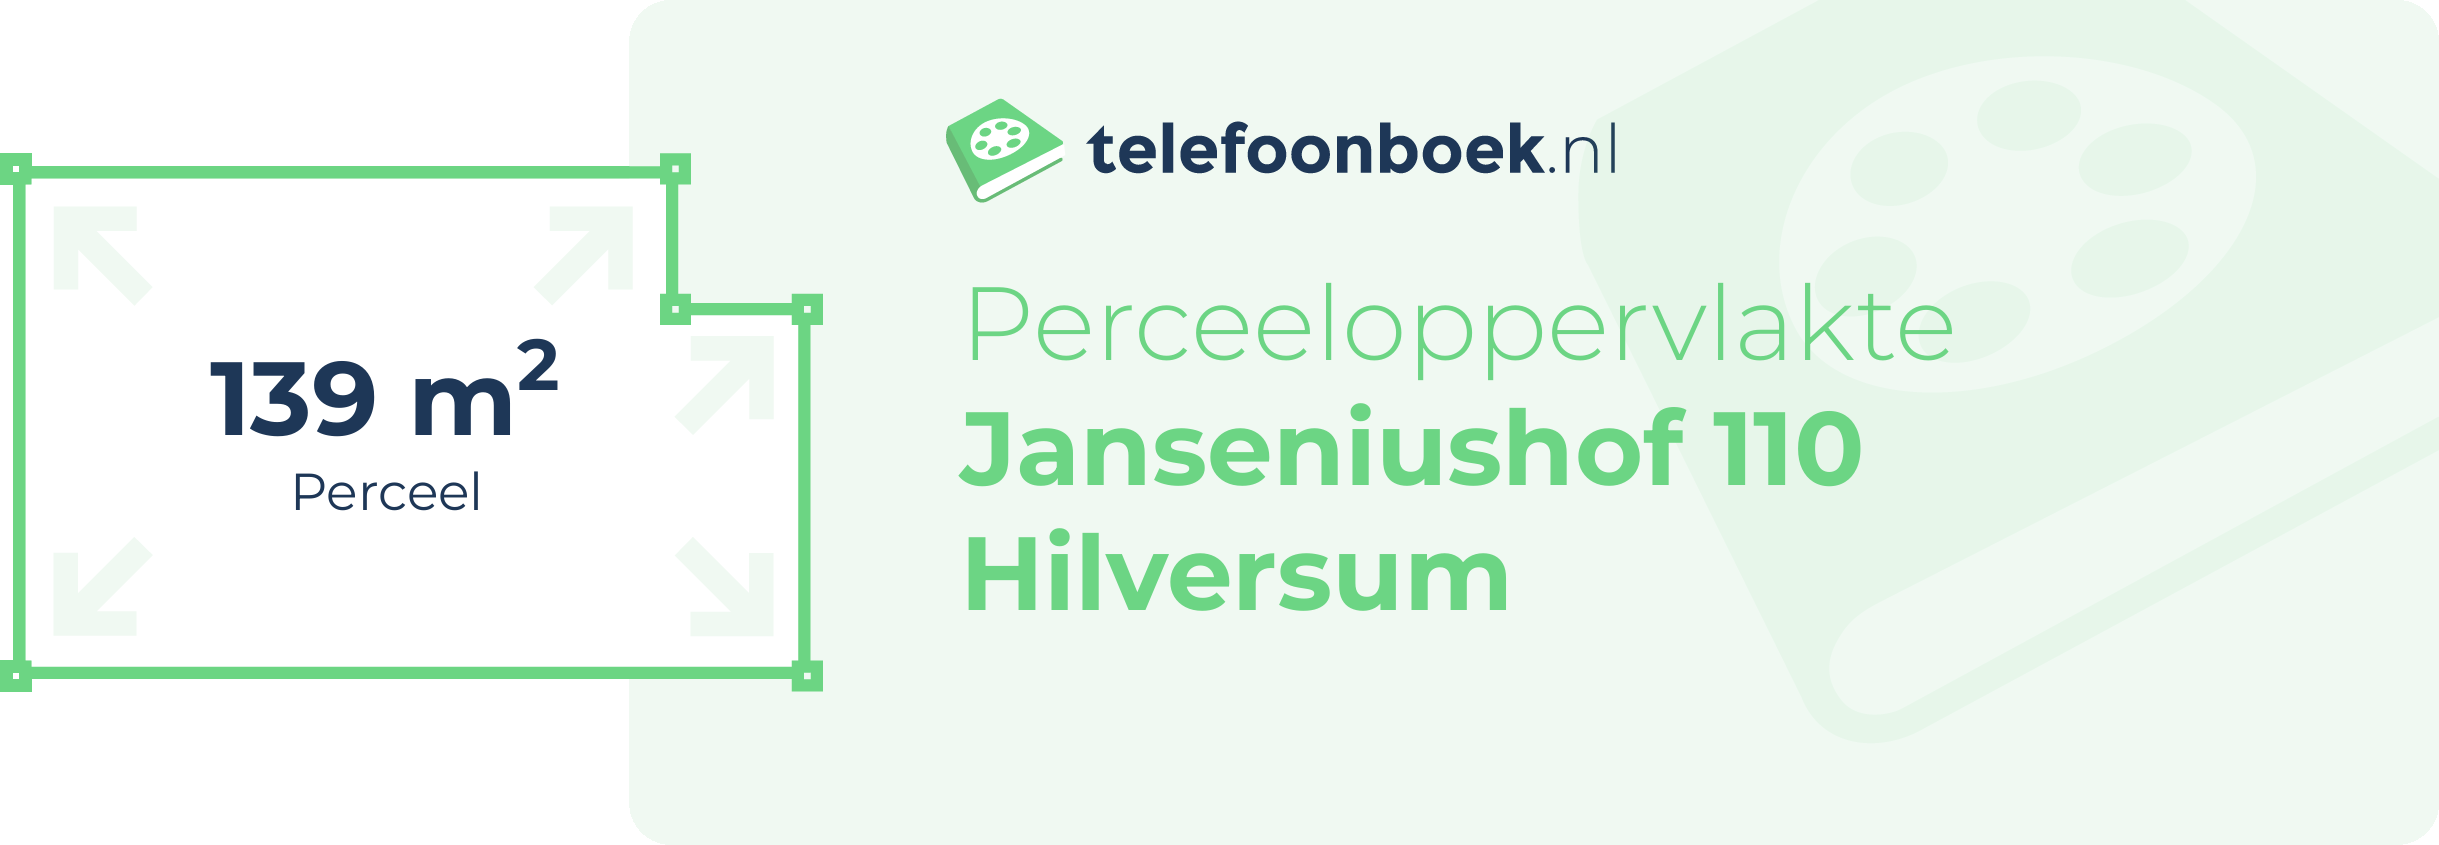 Perceeloppervlakte Janseniushof 110 Hilversum